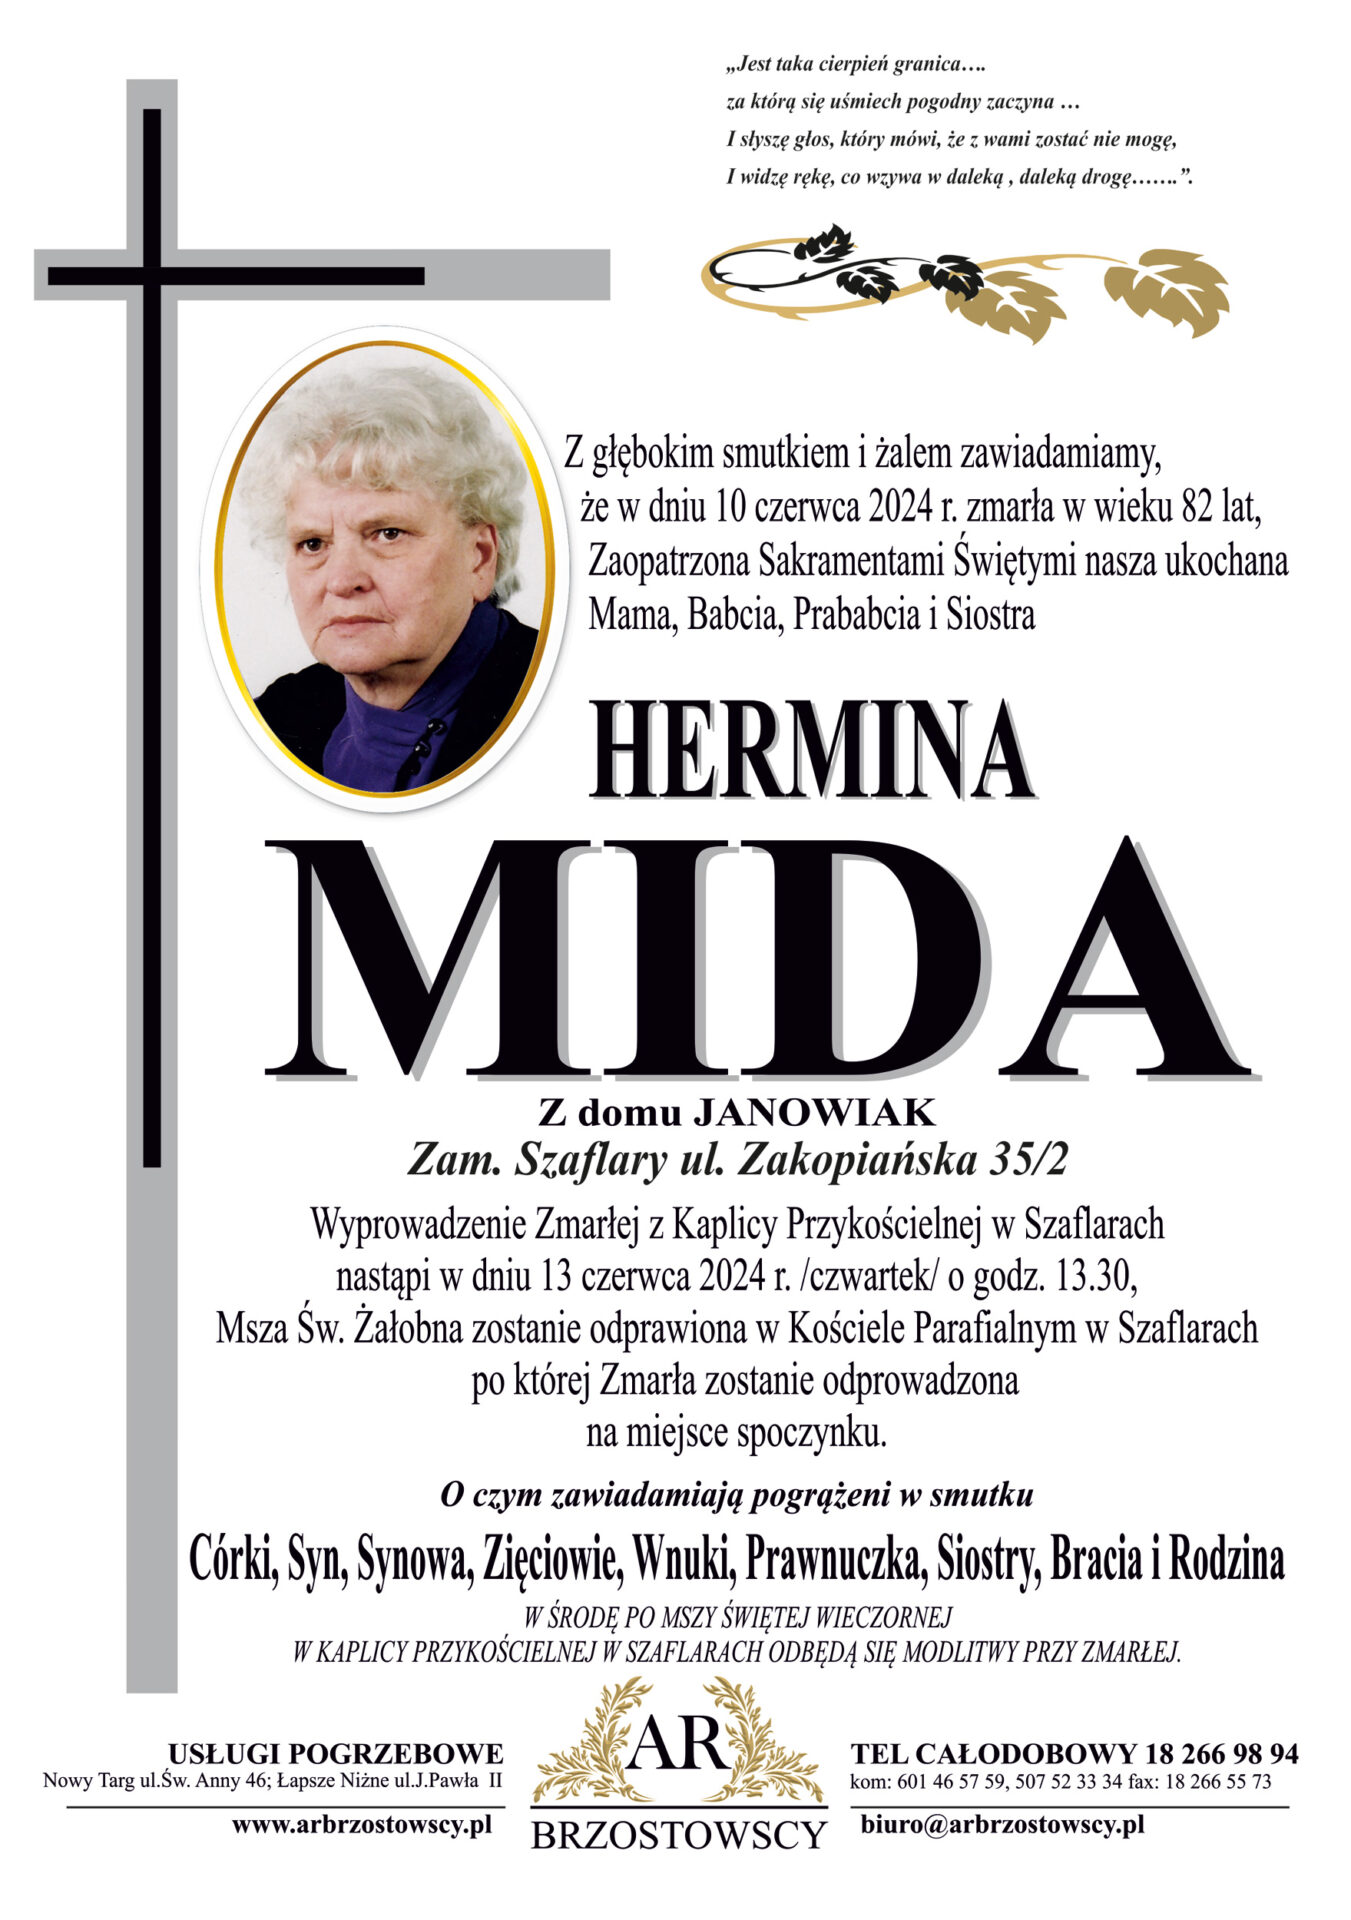 Hermina Mida